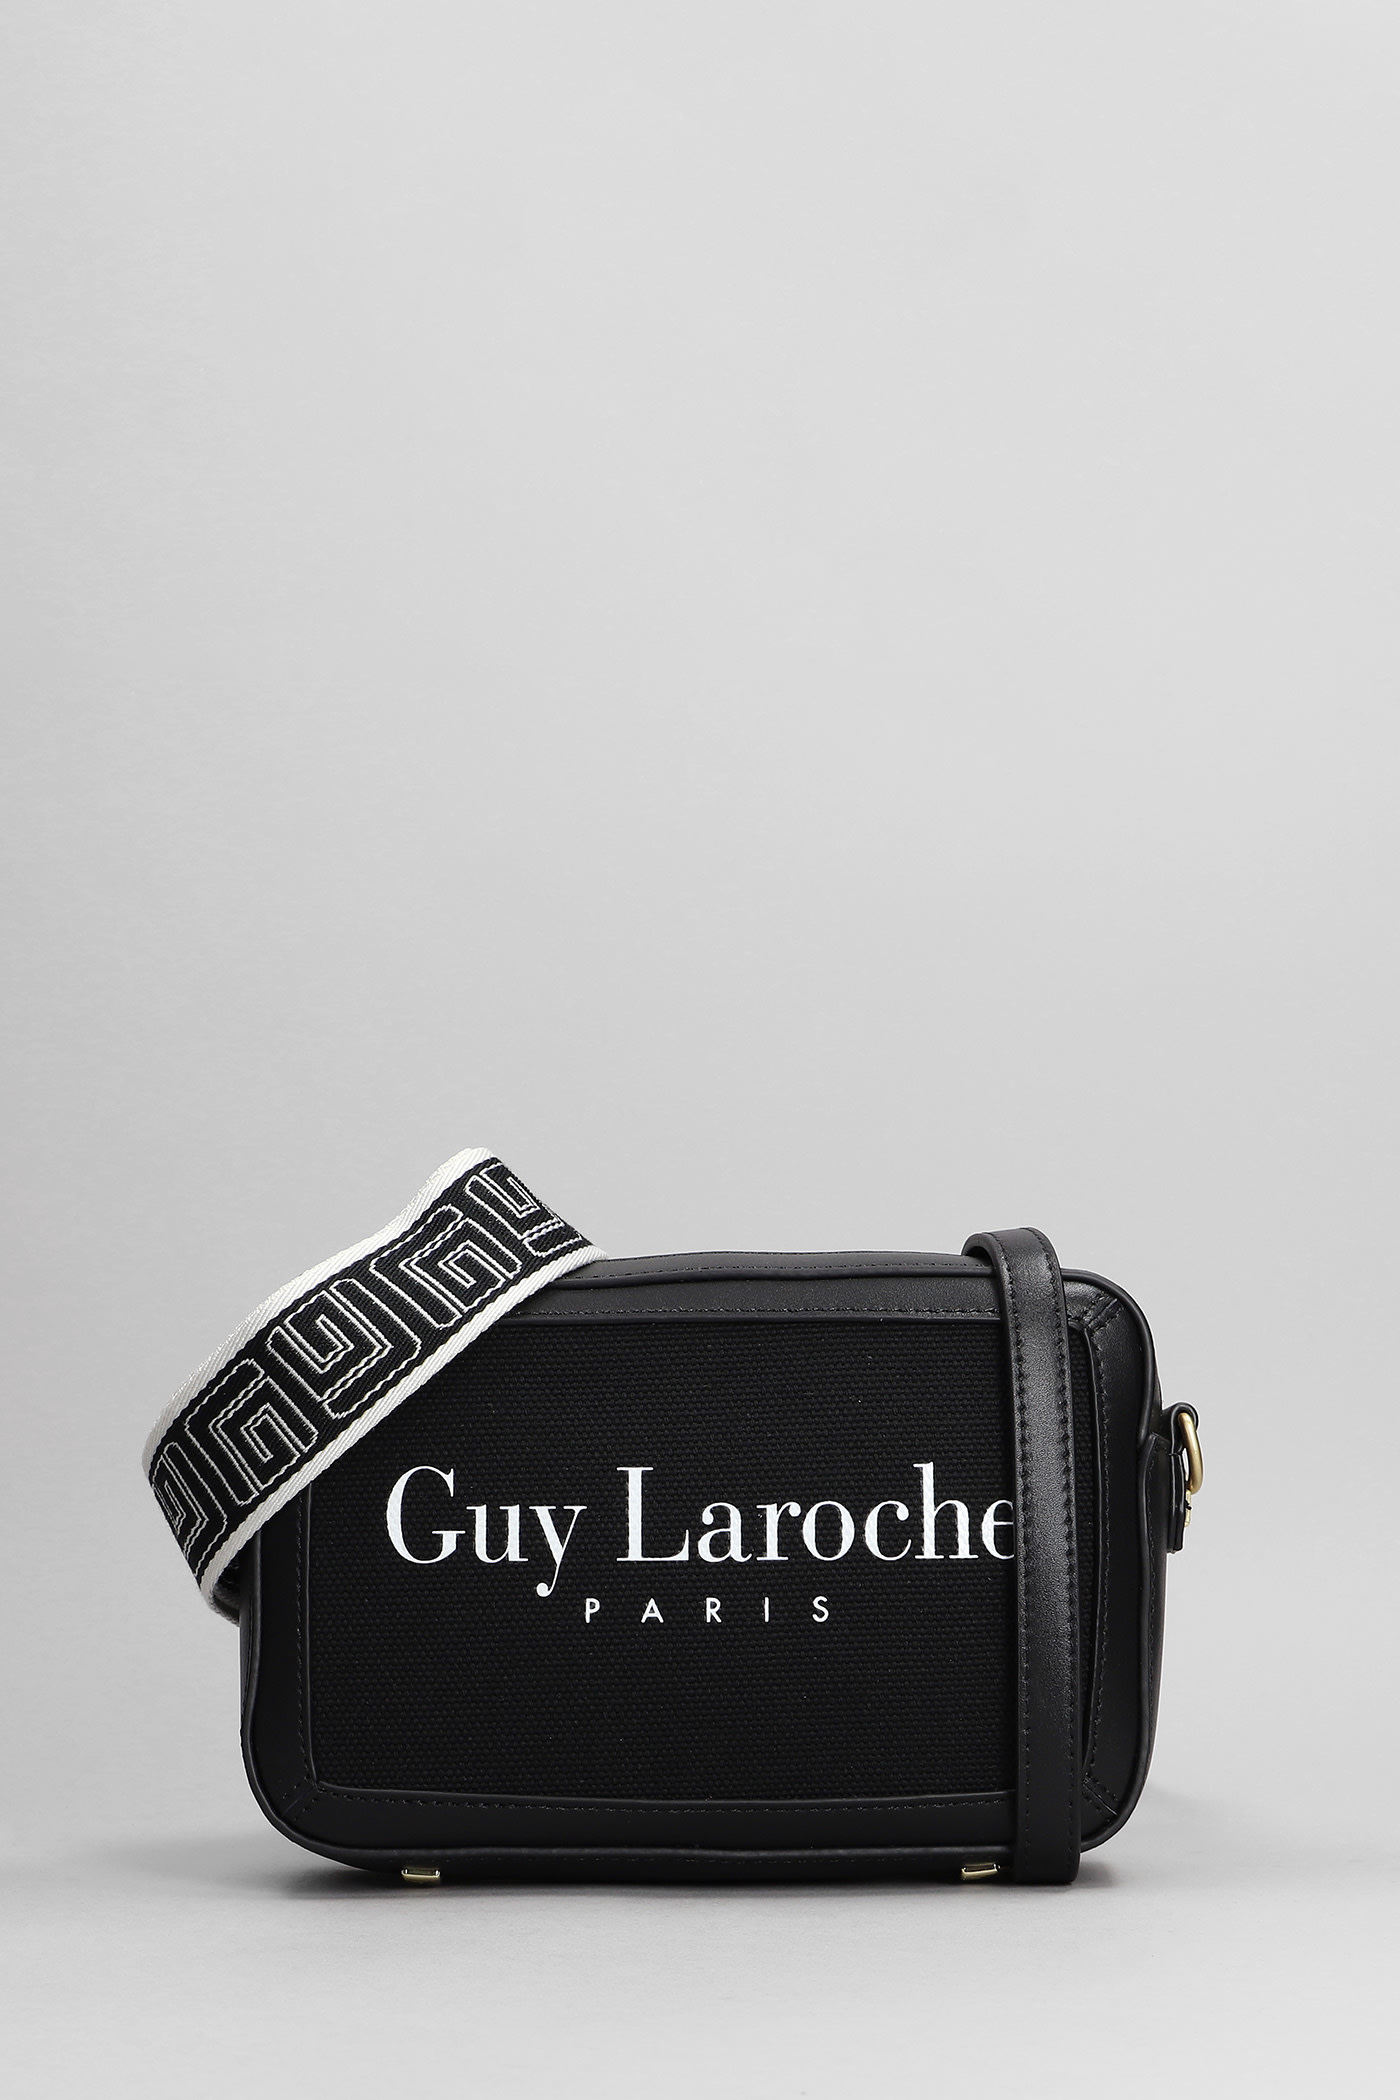 Guy Laroche Black Leather HandBag